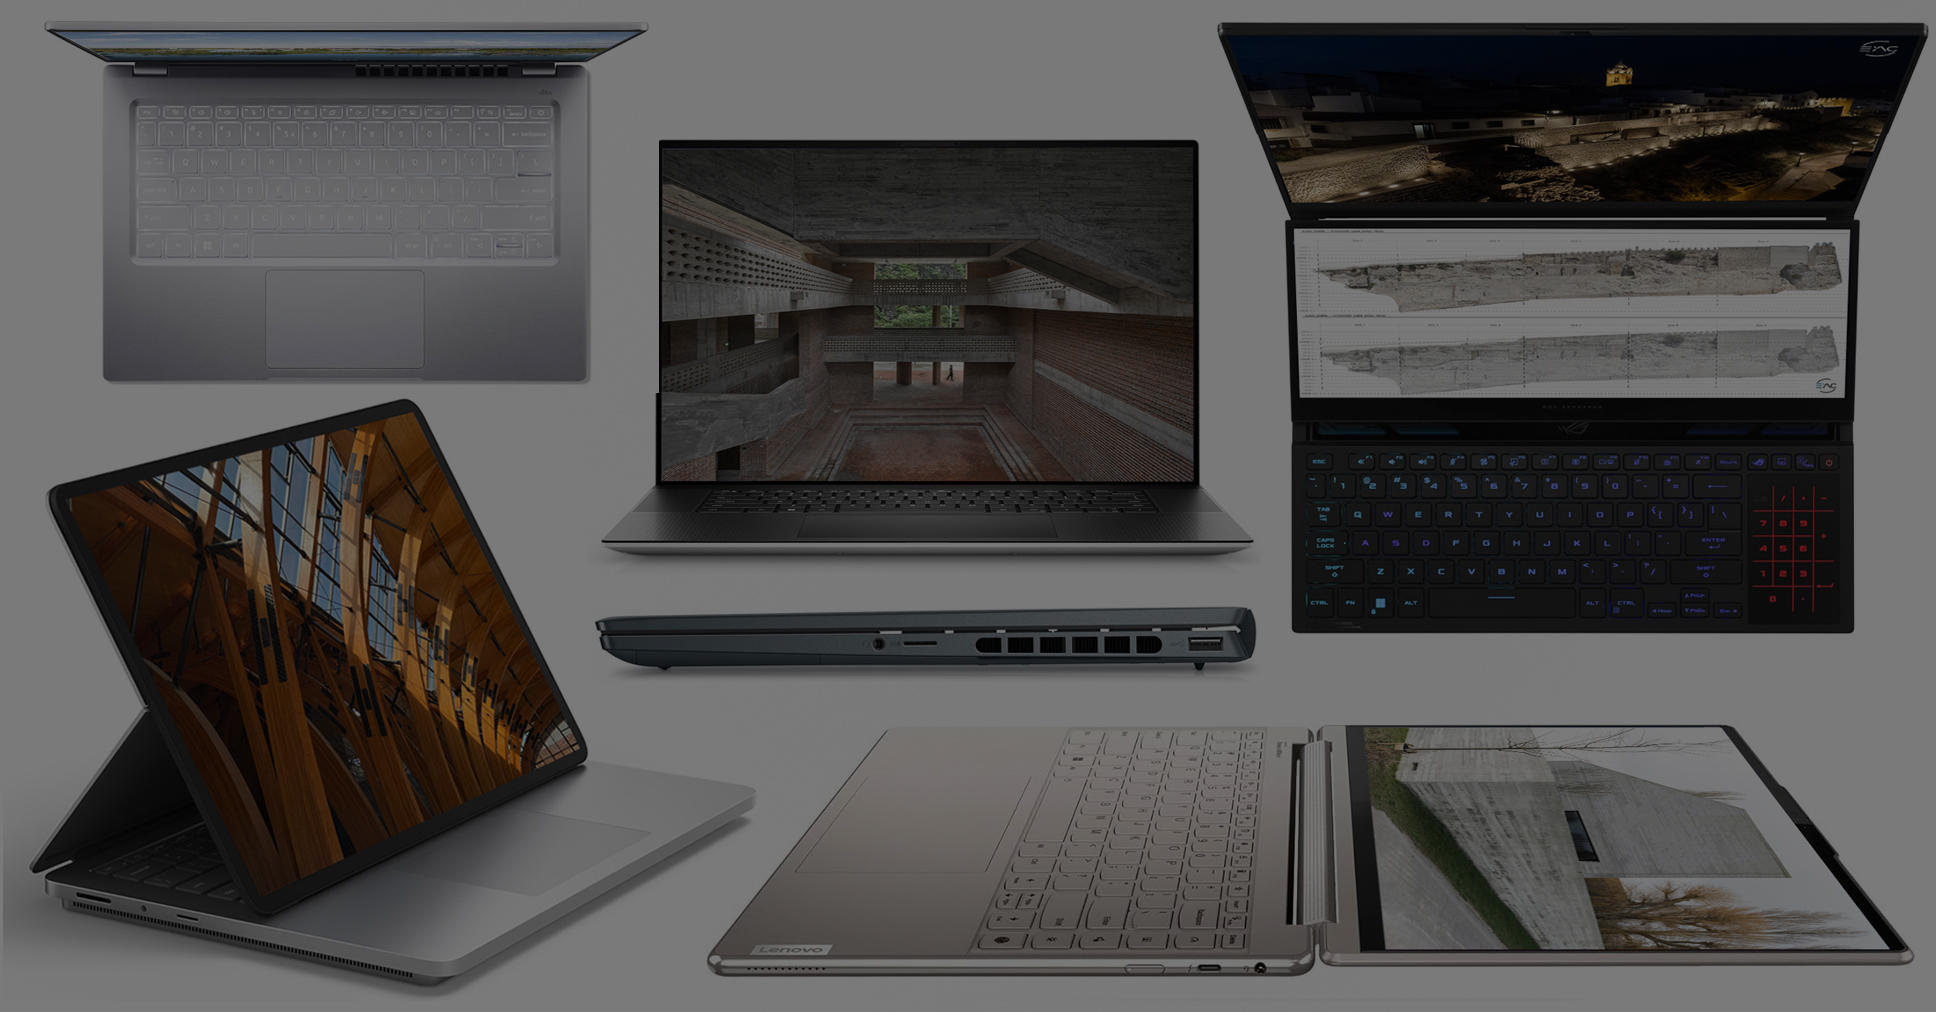 Best 2-in-1 laptops 2023: Top picks in portable, flexible designs